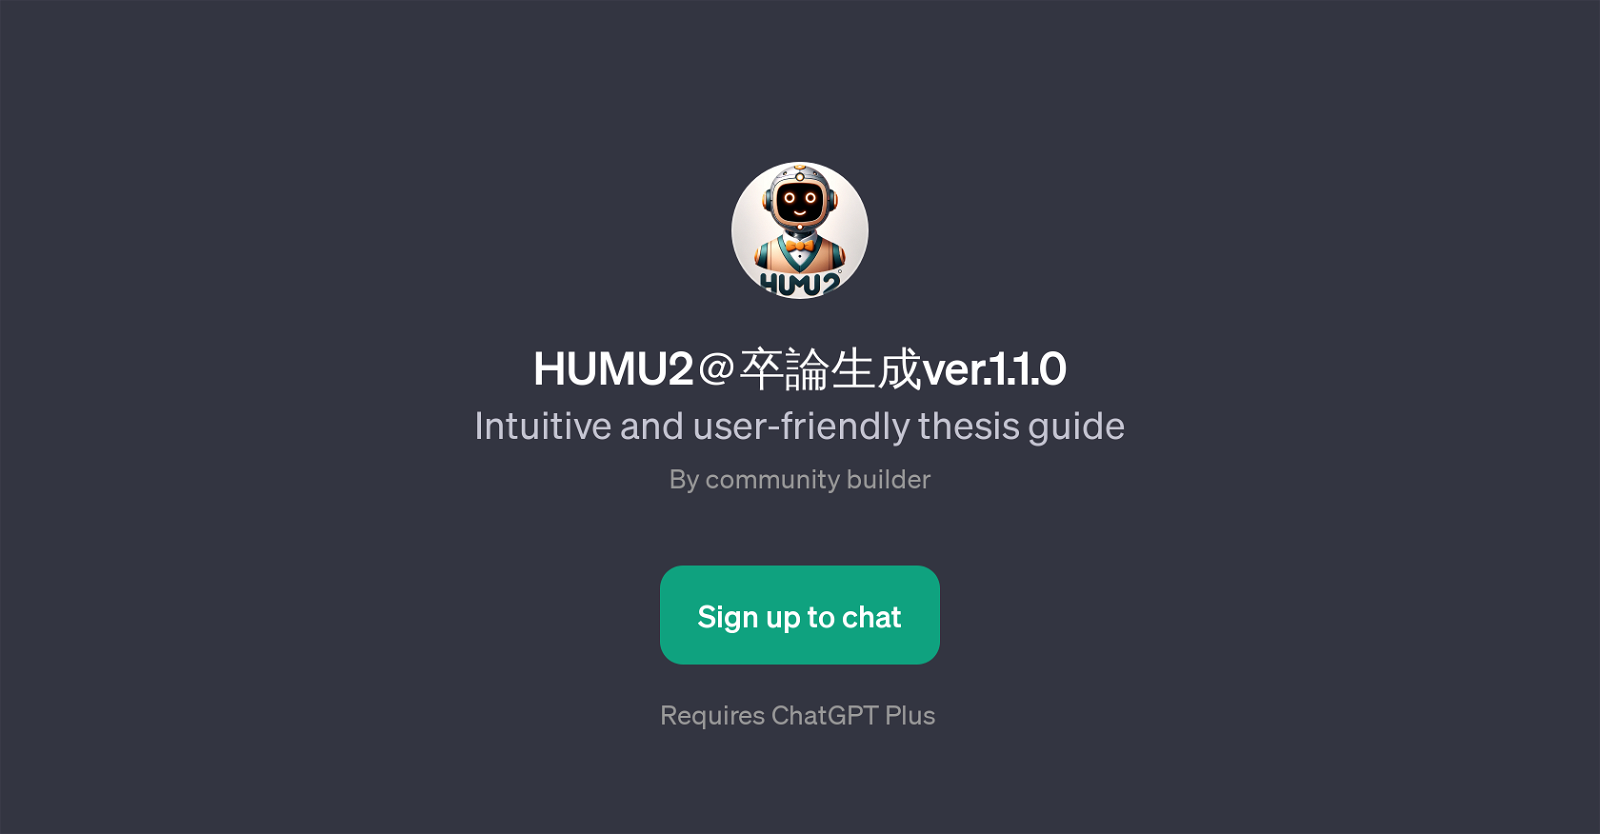 HUMU2ver.1.1.0 website